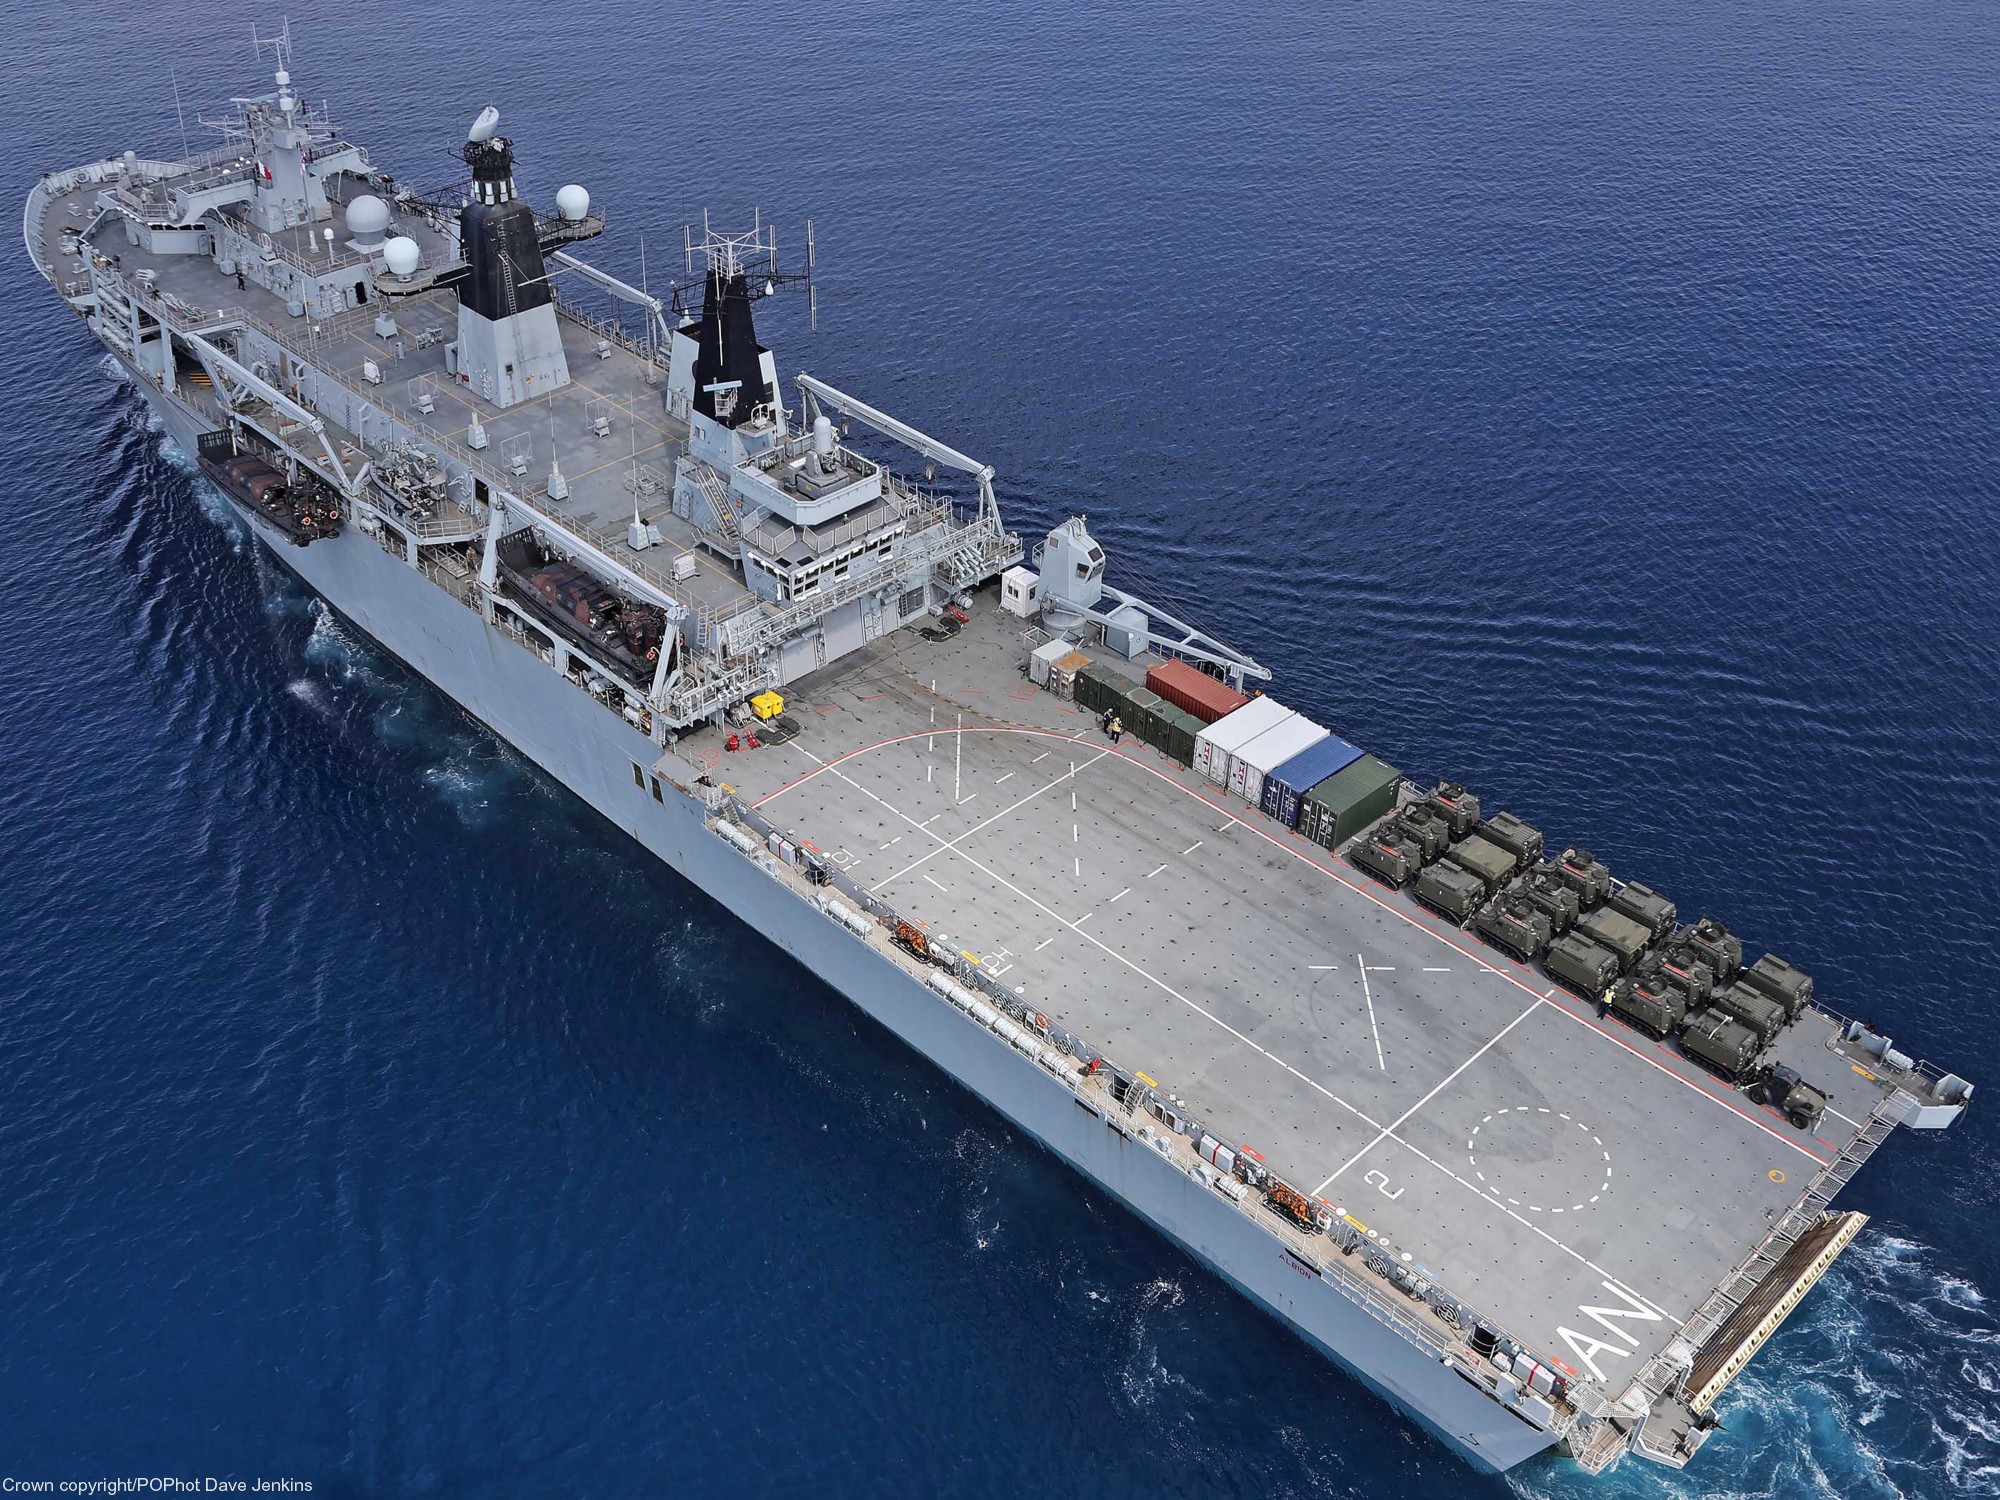 albion class landing platform dock amphibious assault ship lpd royal navy 71c